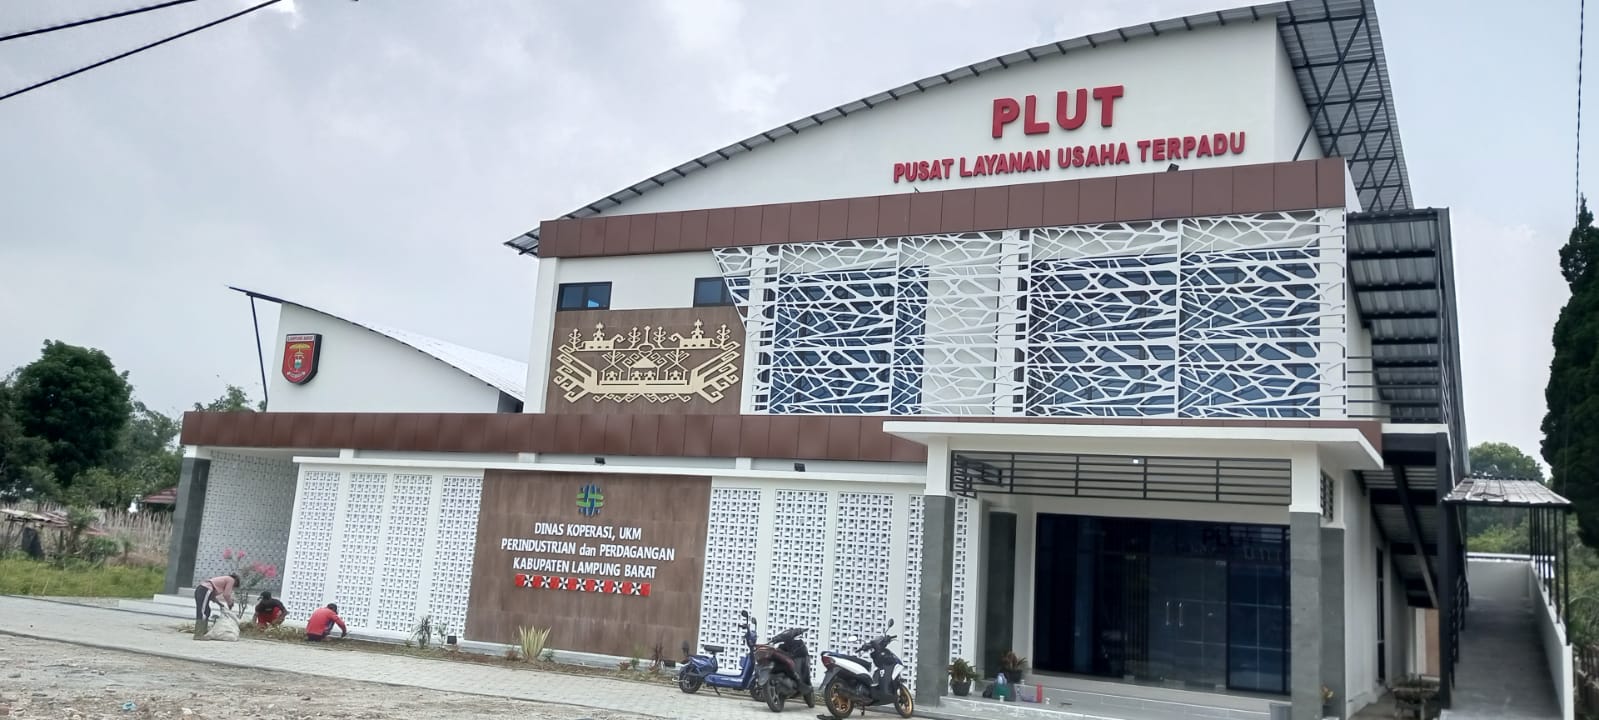 Pemkab Lampung Barat Rekrut Konsultan PLUT KUMKM untuk 6 Jabatan, Berikut Syarat Bagi Pelamar